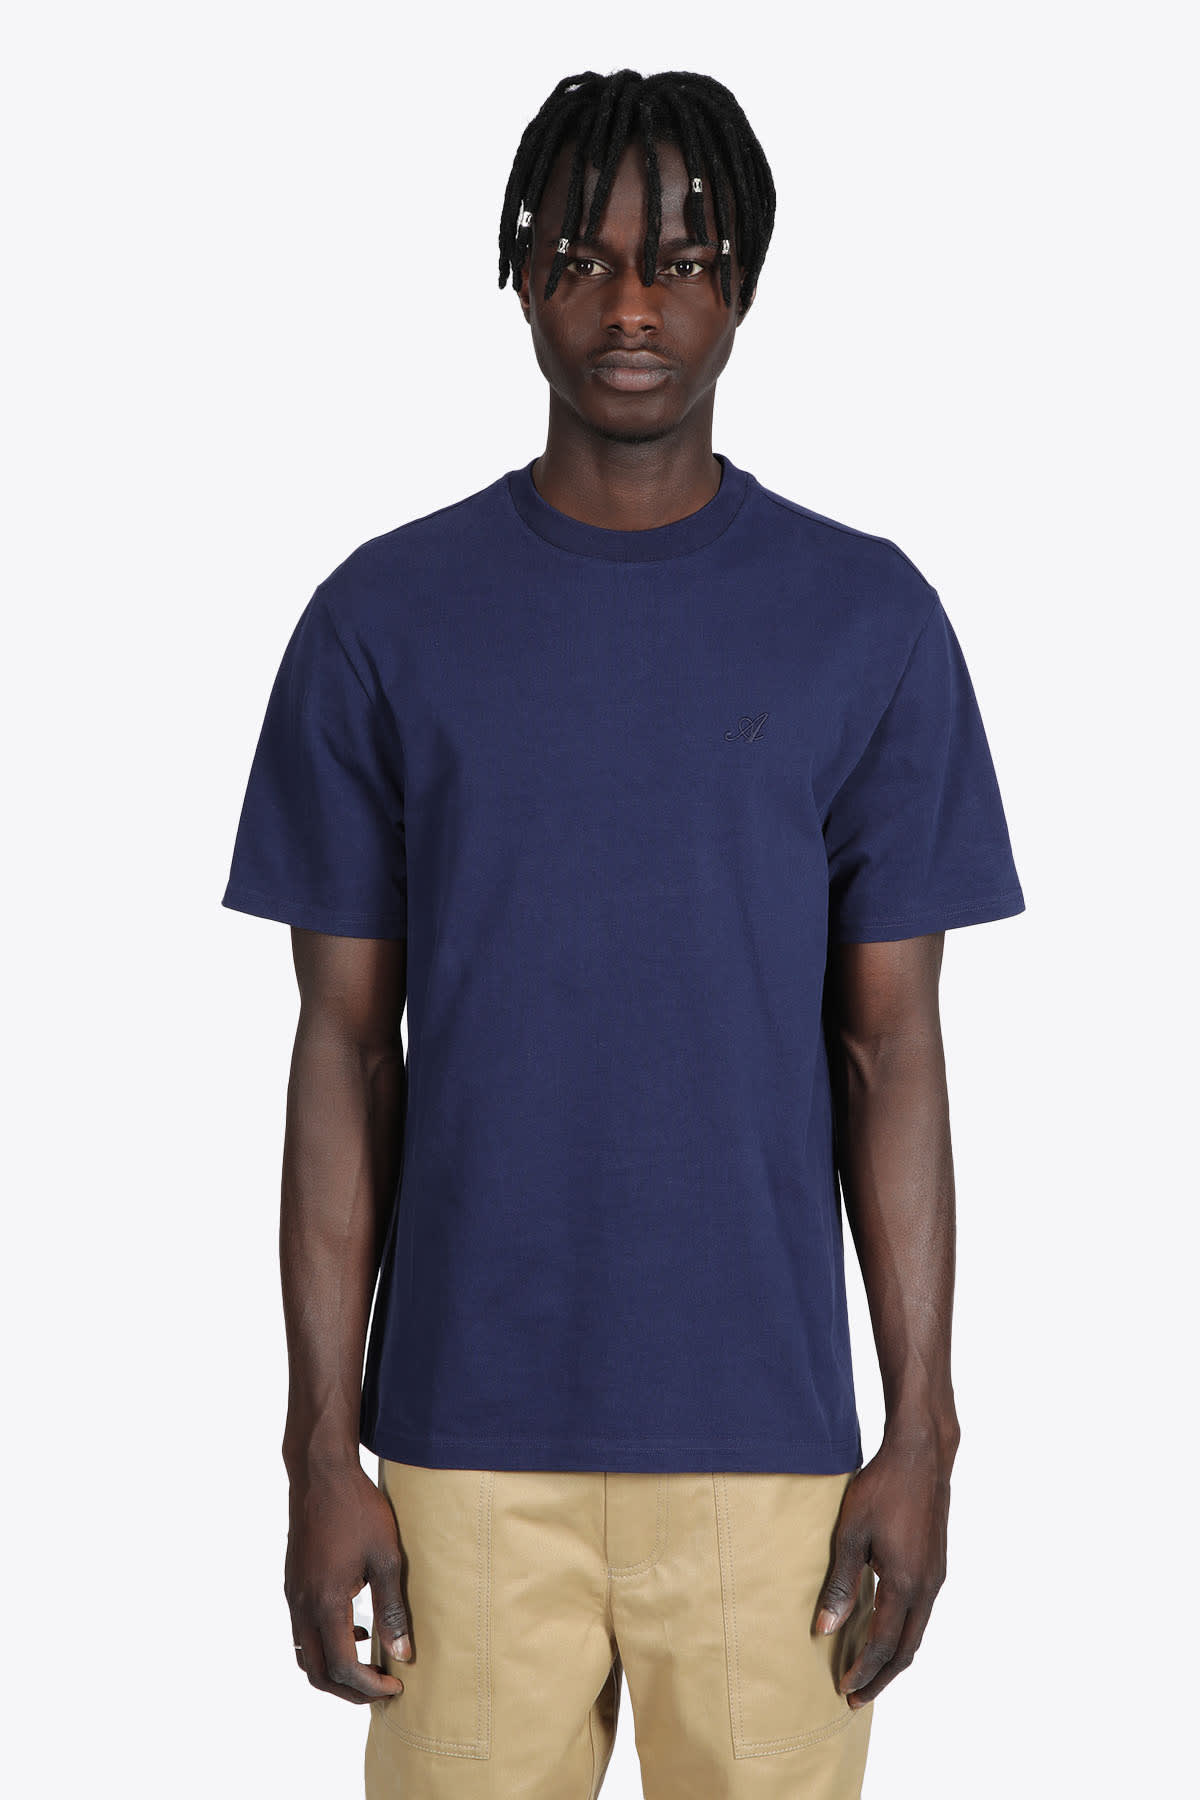 Axel Arigato Signature T-shirt Blue cotton t-shirt with A chest embroidery - Signature T-shirt